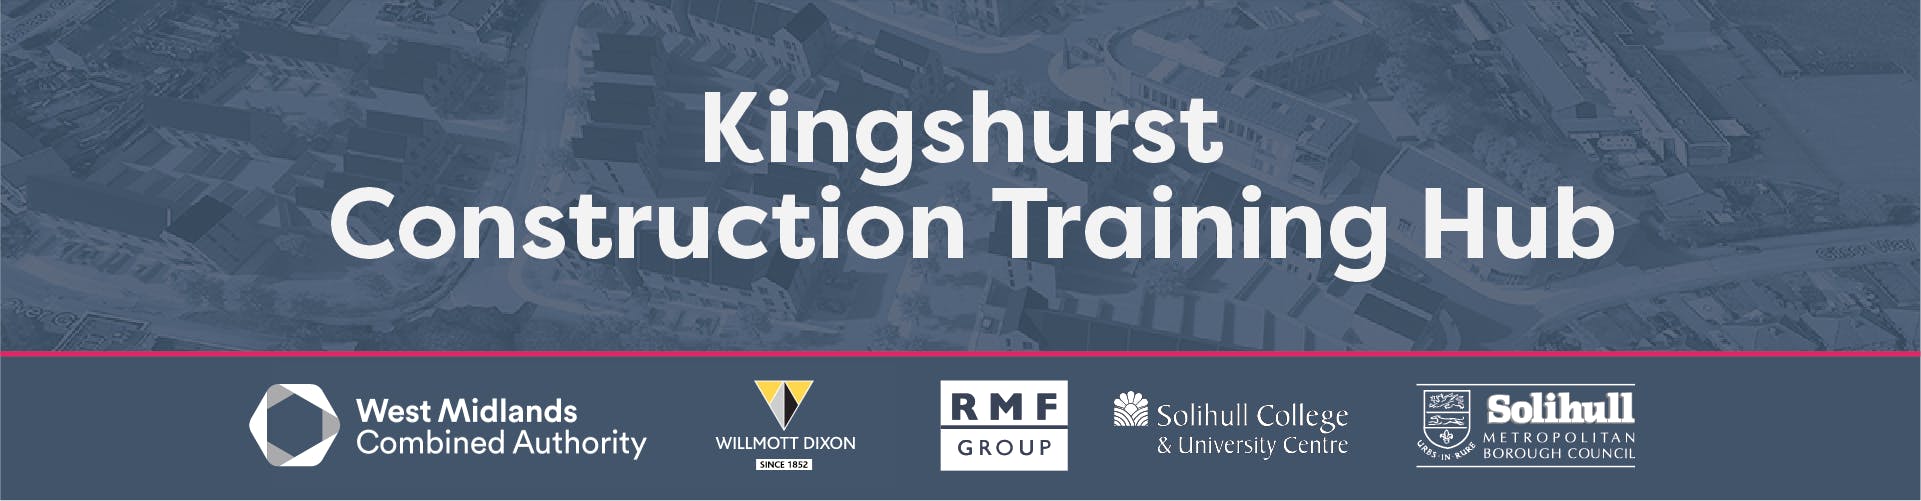 Kingshurst Construction Training Hub